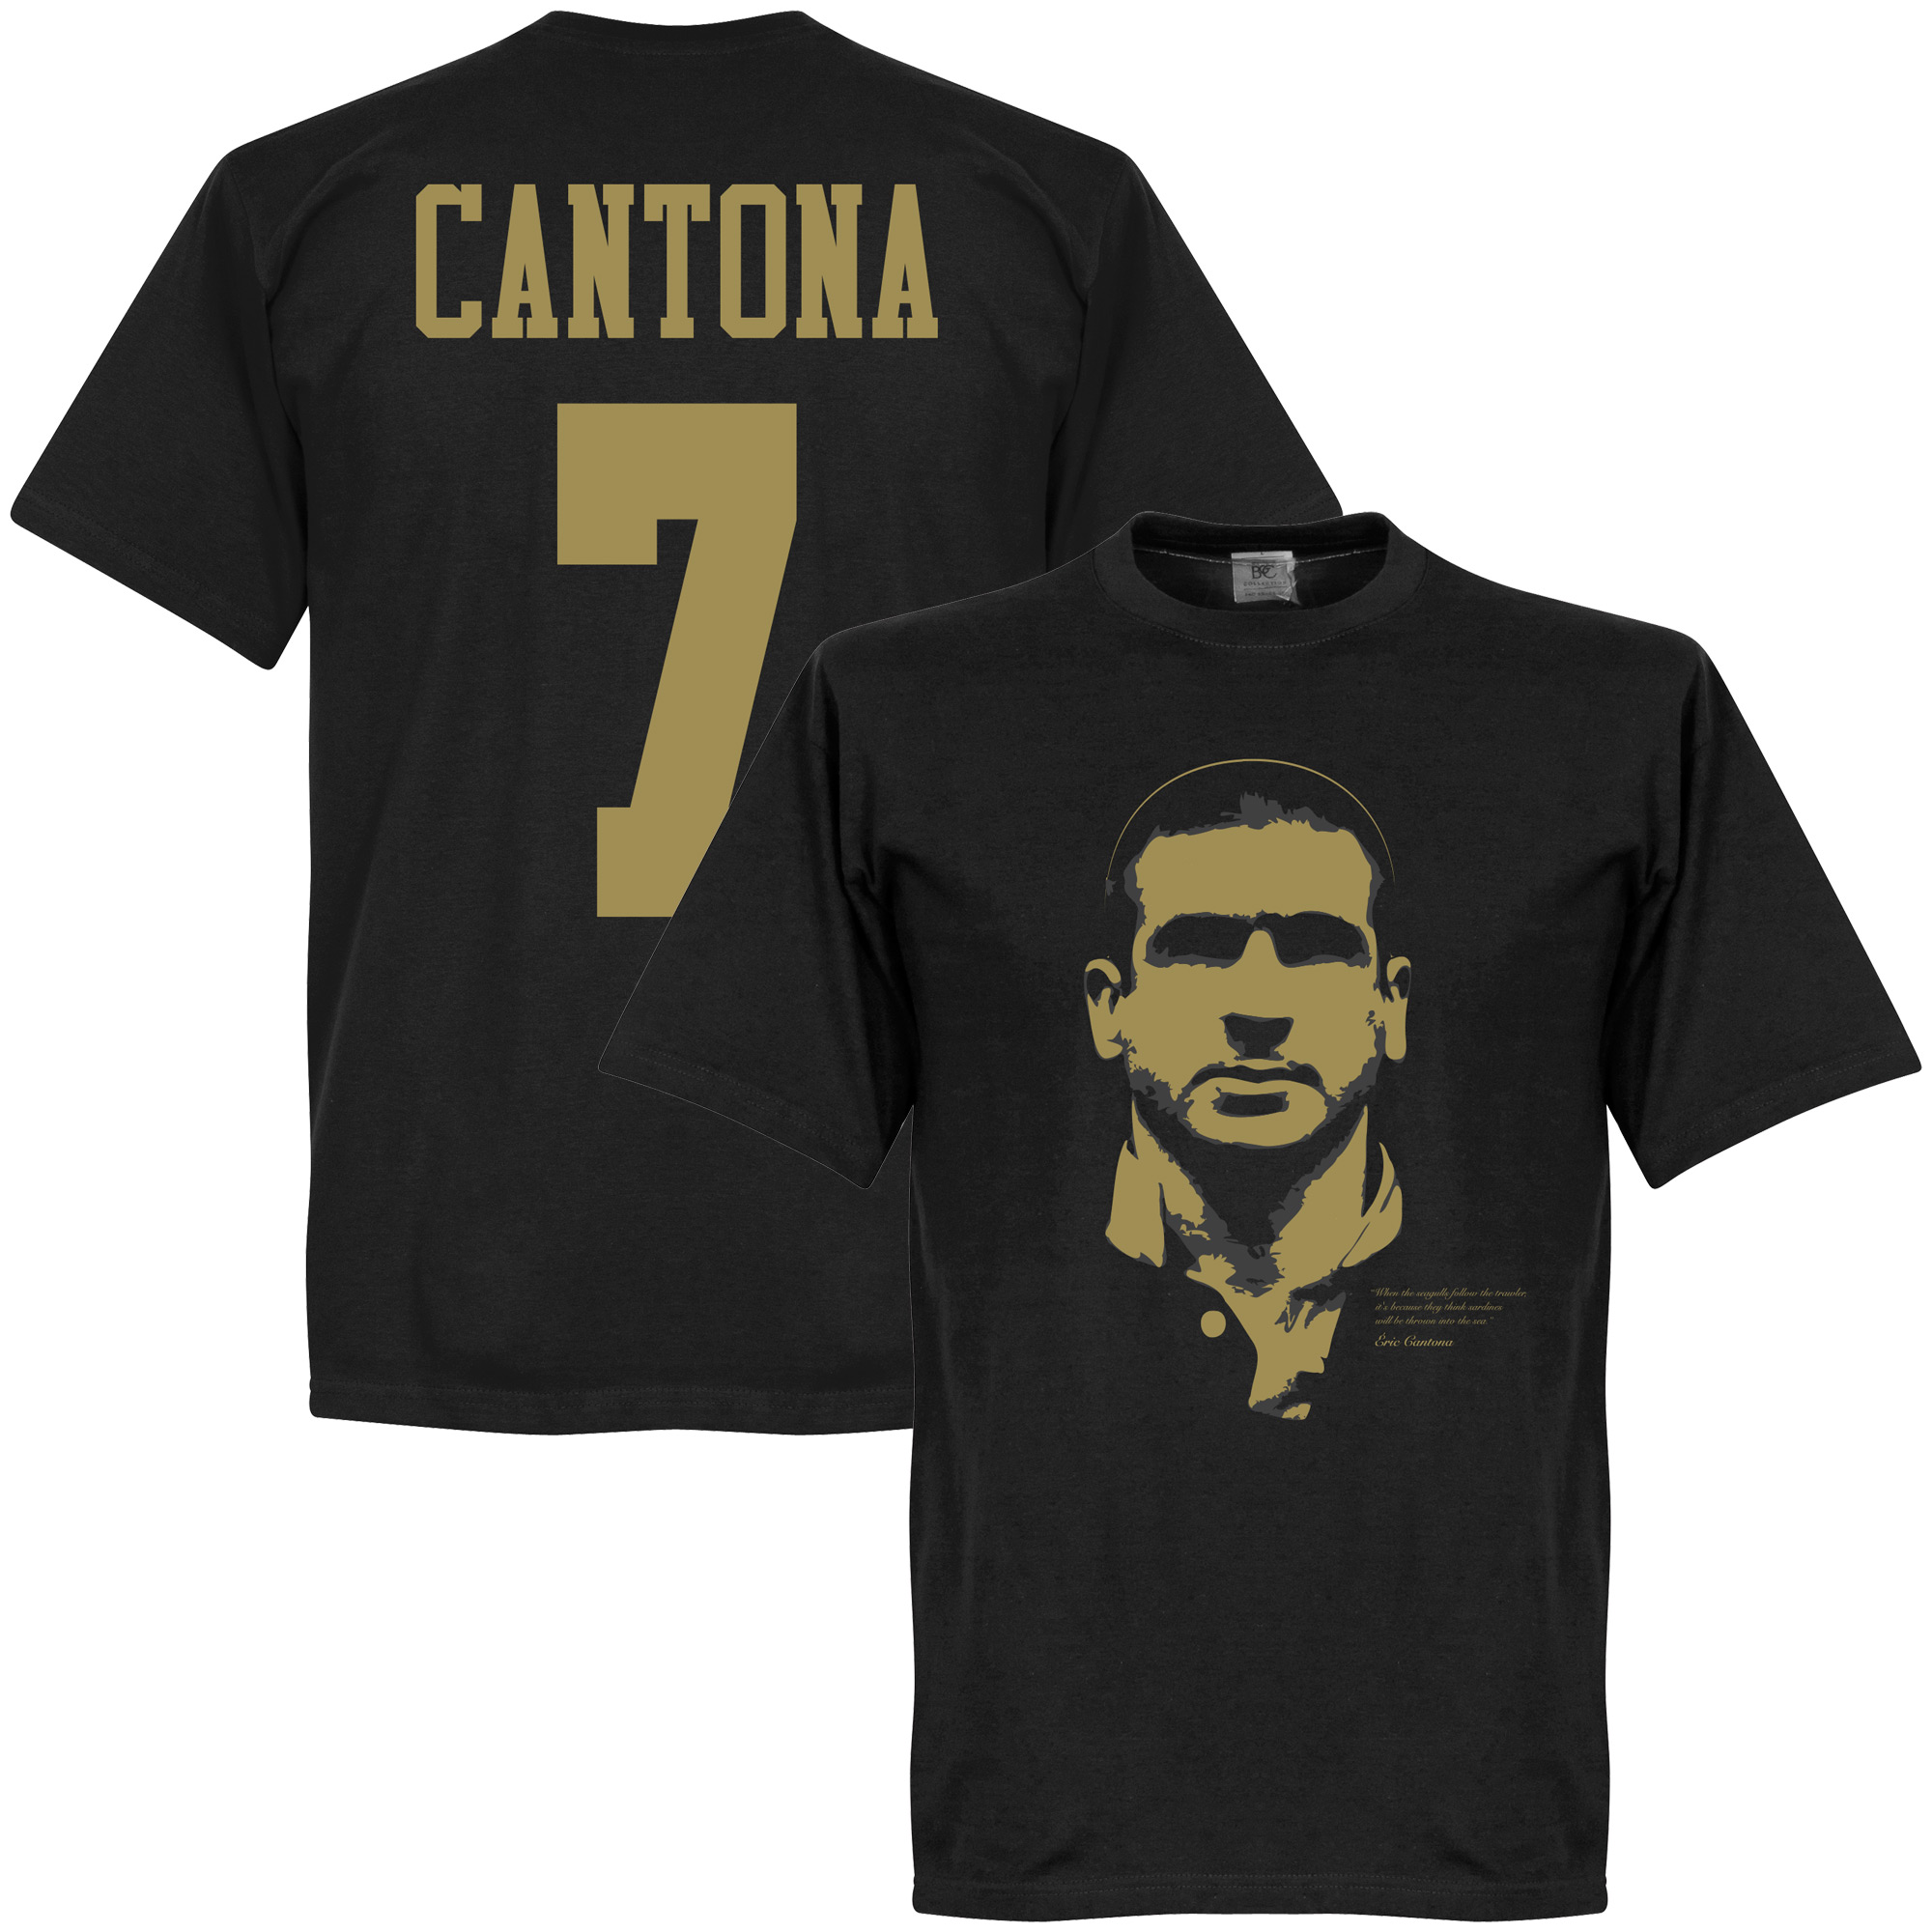 Cantona Silhouette T-Shirt XL